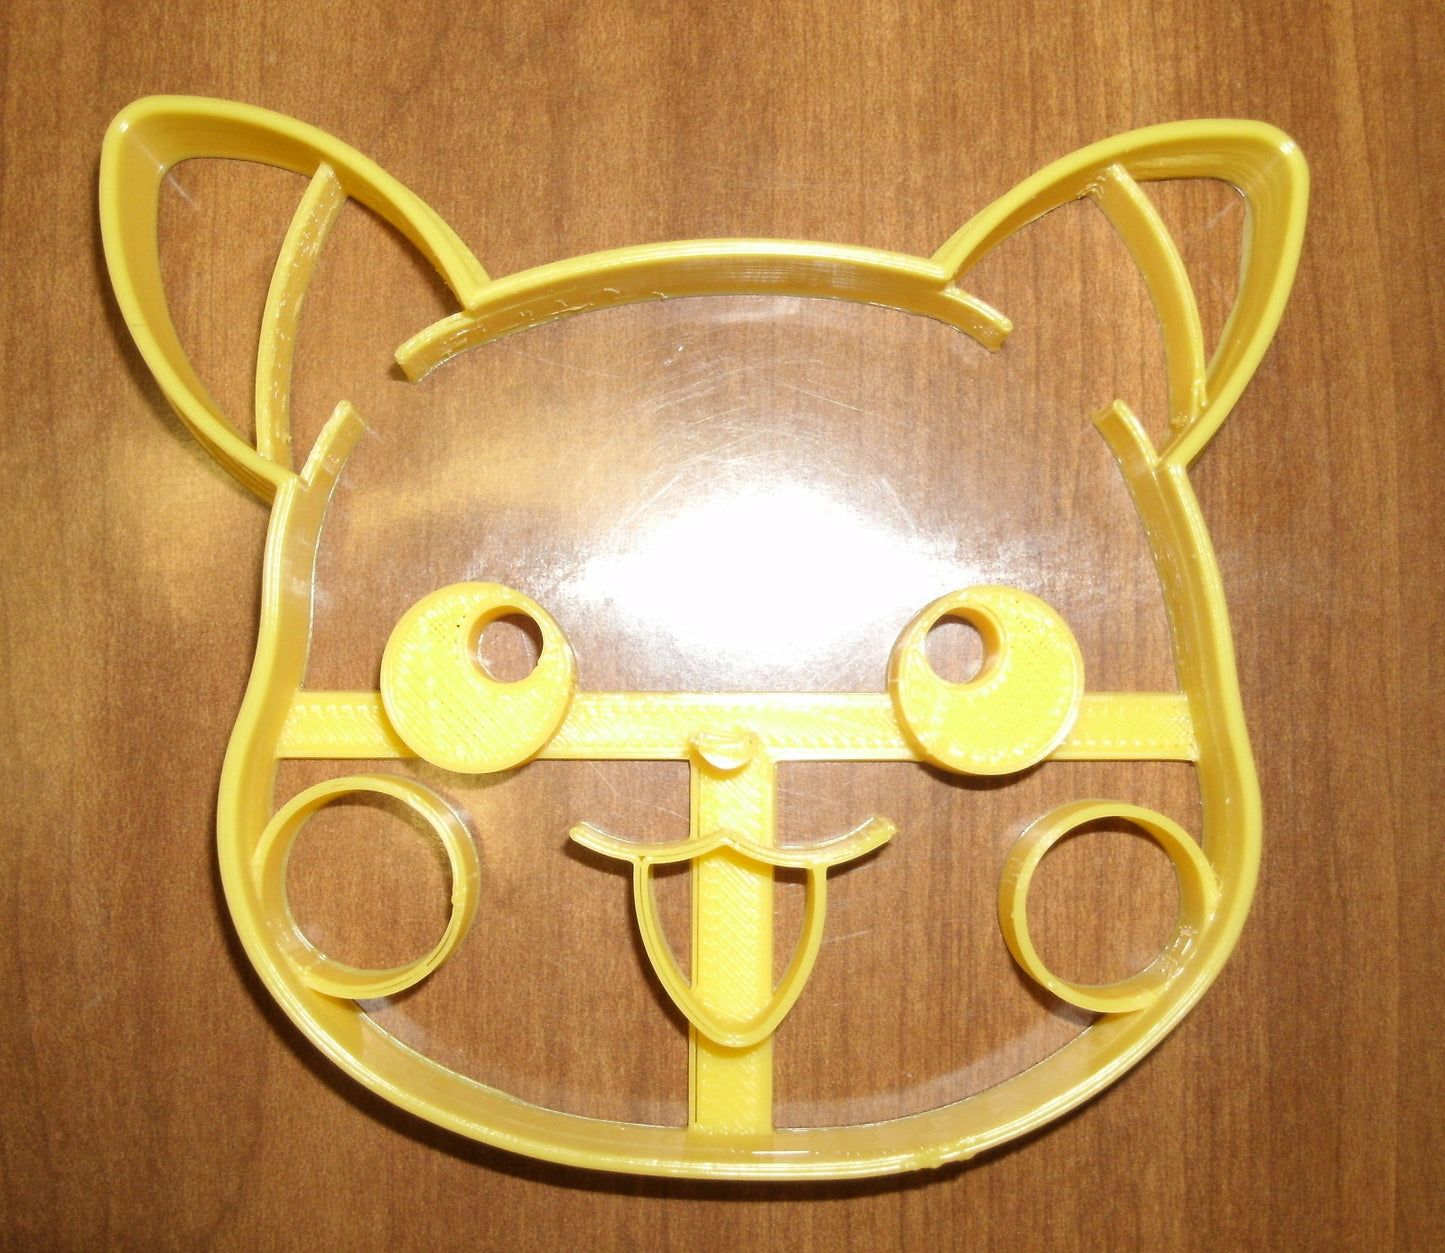 6x Pikachu Face Fondant Cutter Cupcake Topper Size 1.75" USA FD603